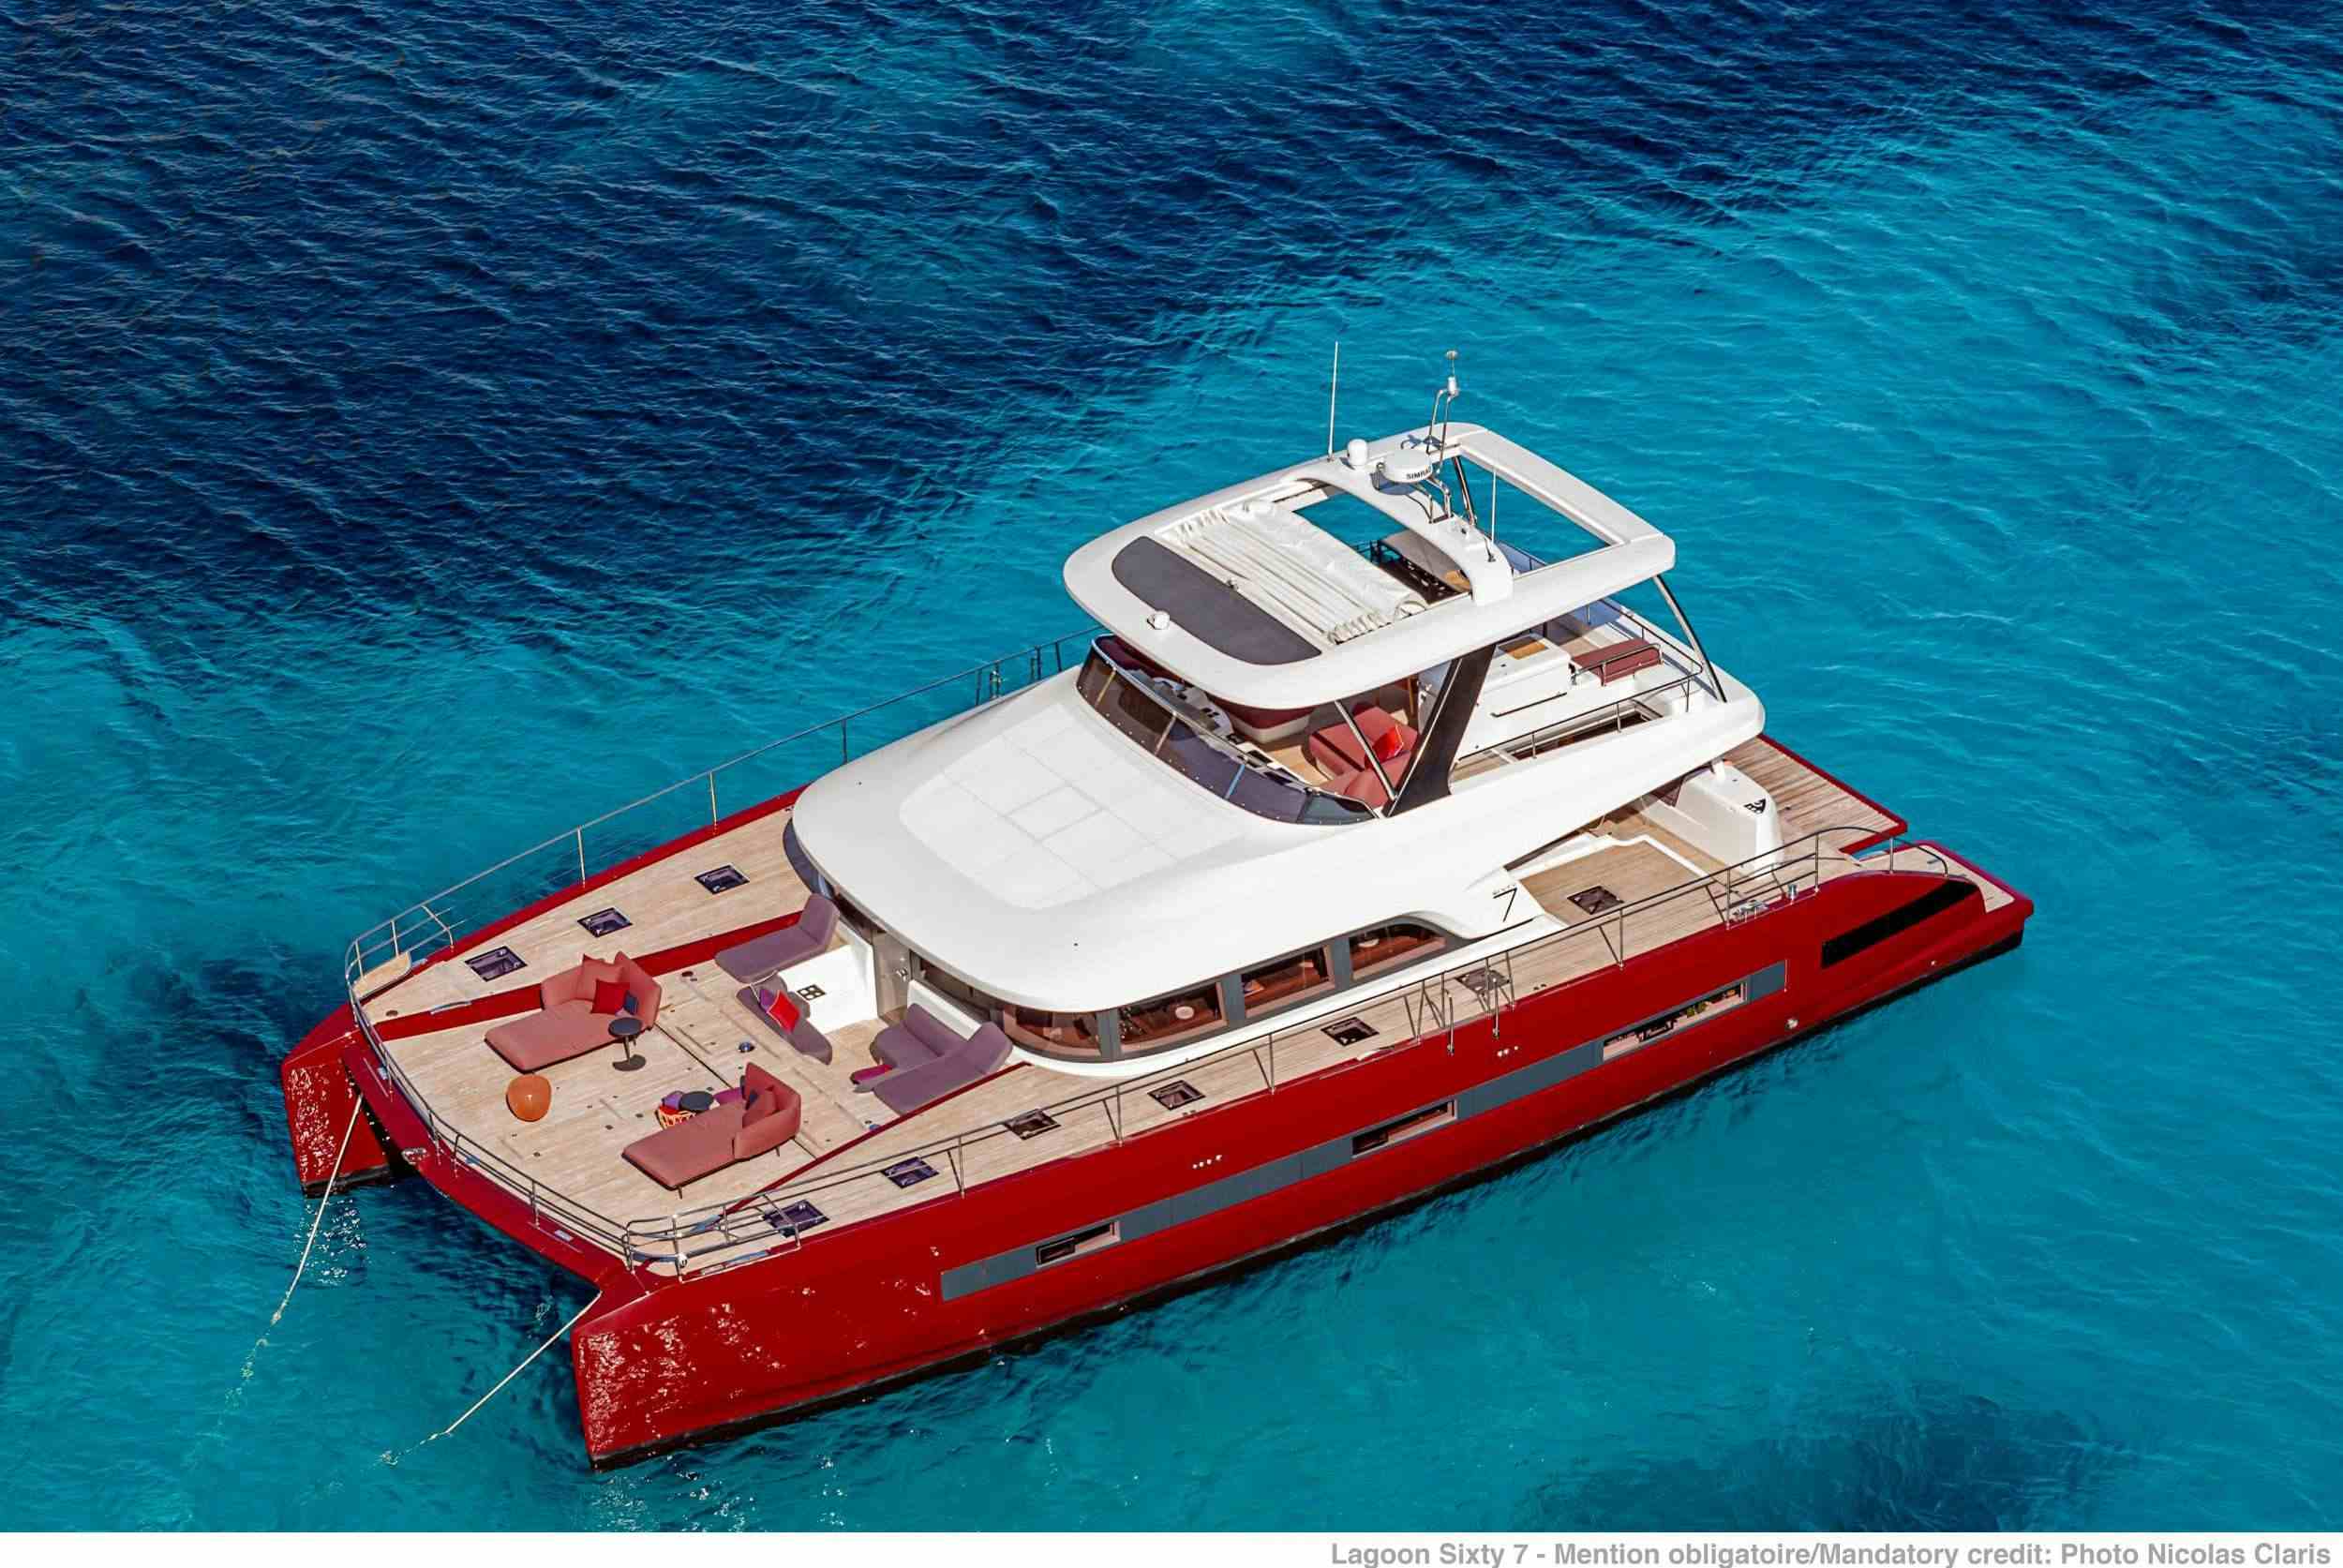 VALIUM 67 - Yacht Charter Lefkada & Boat hire in Greece 1